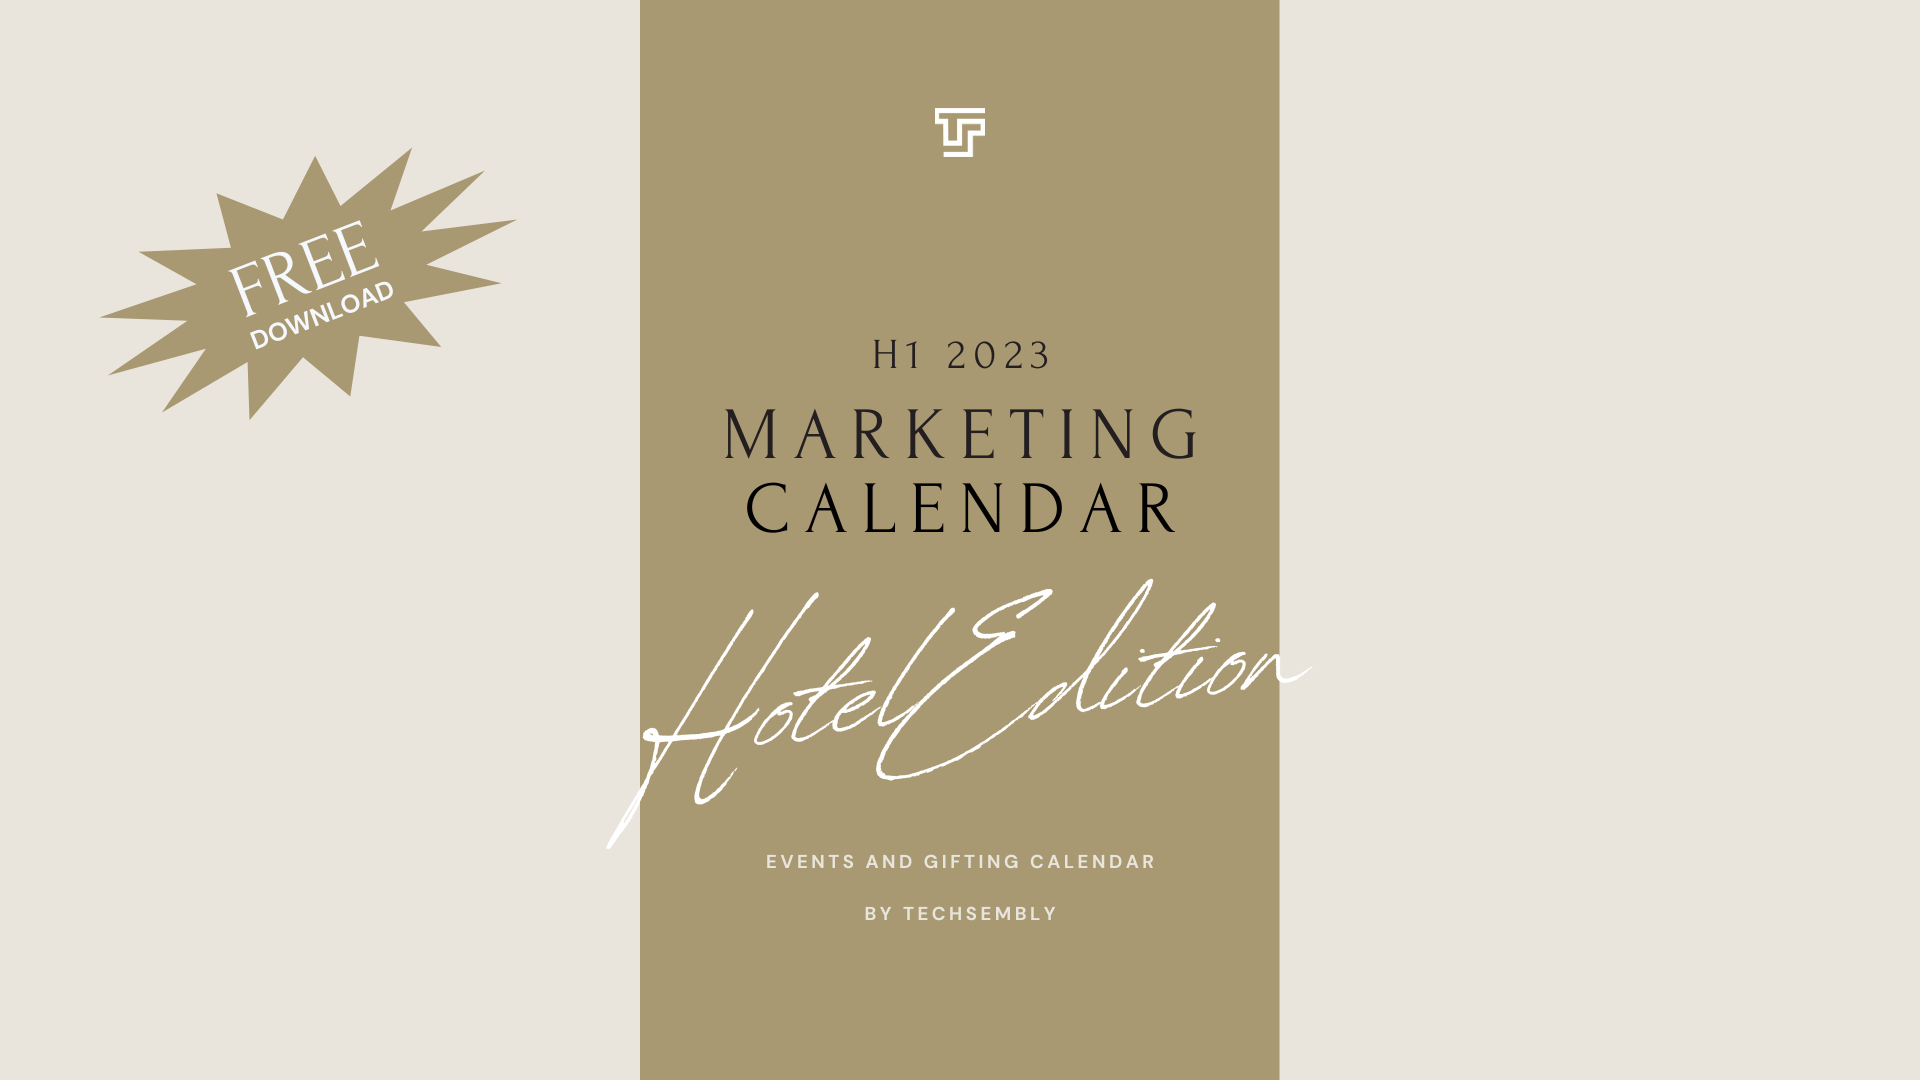 TS Marketing Calendar H12023 Cover